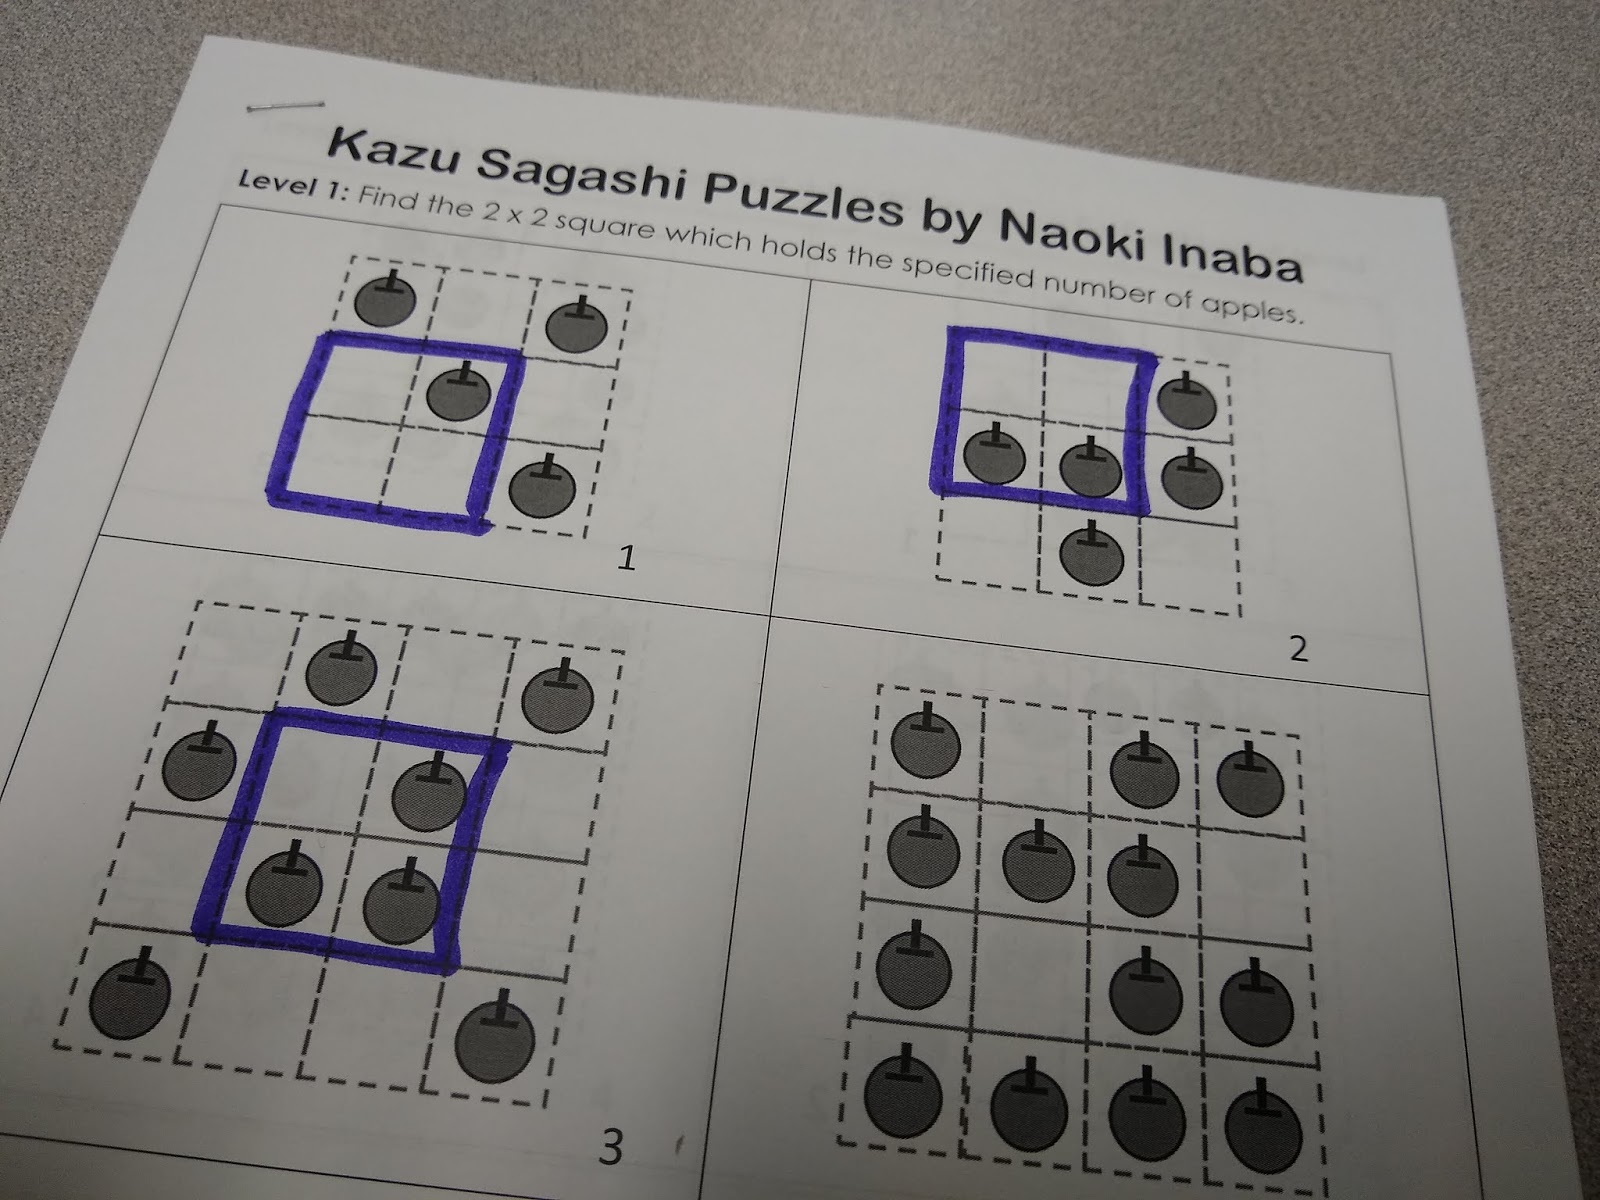 Kazu Sagashi Puzzles from Naoki Inaba